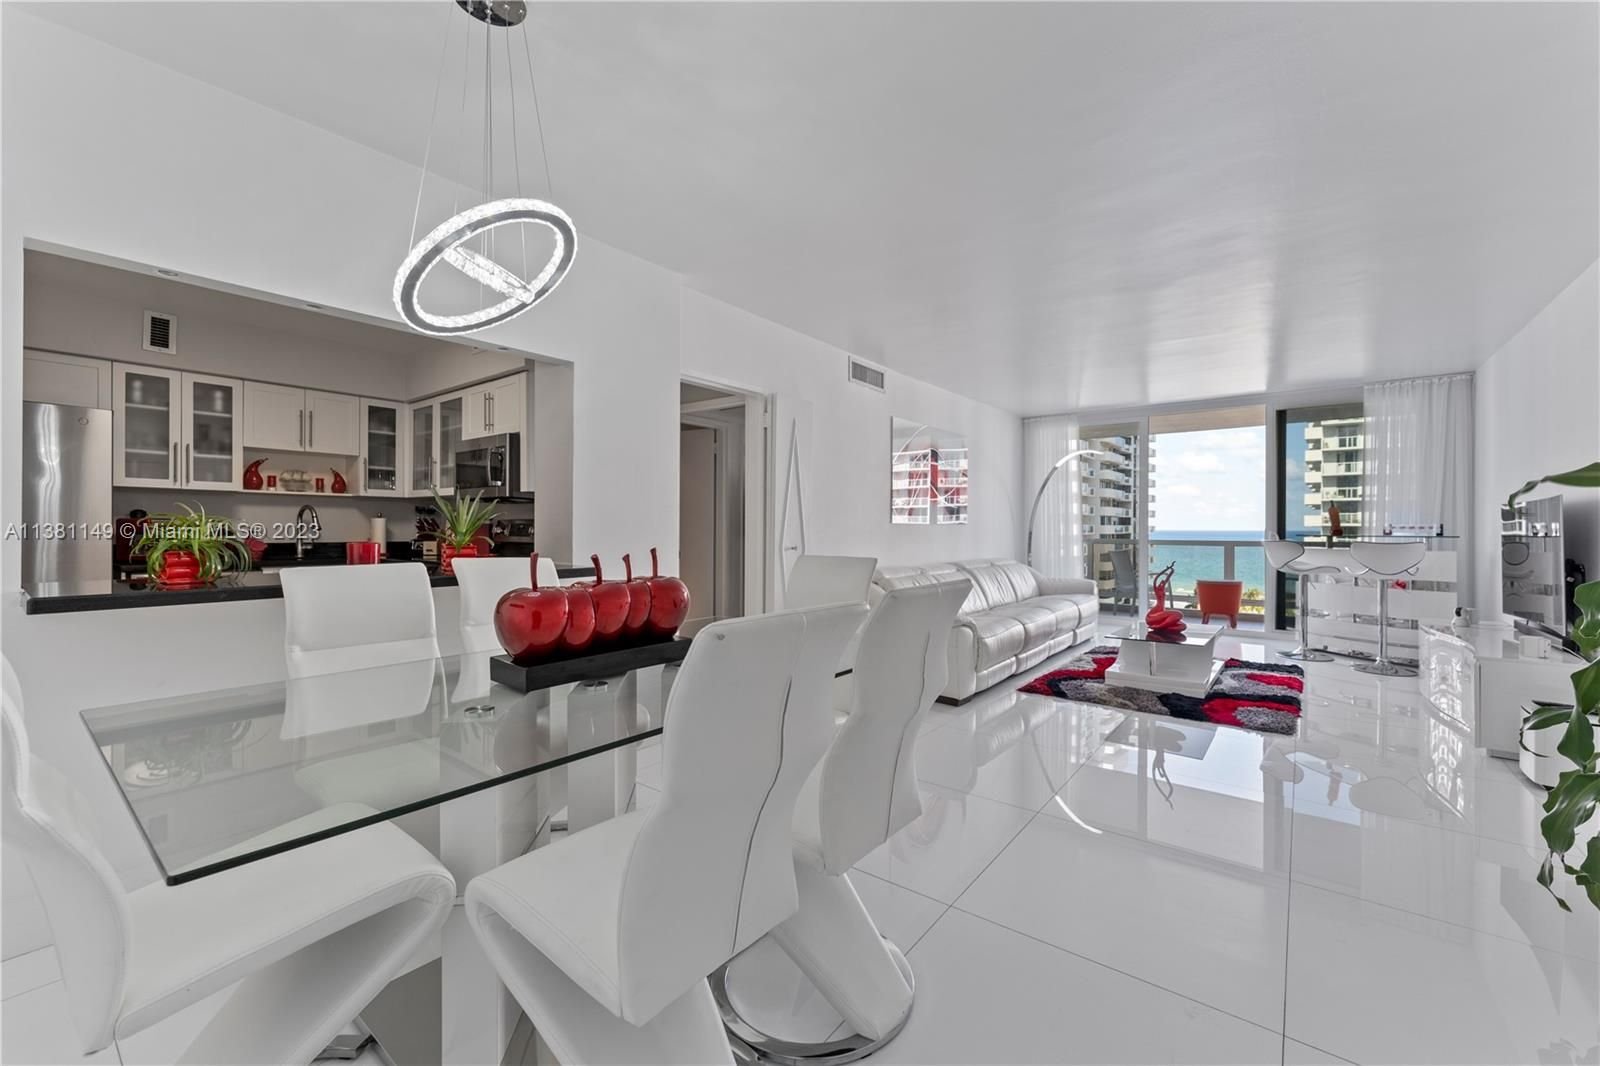 Real estate property located at 5700 Collins Ave #11B, Miami-Dade County, Miami Beach, FL